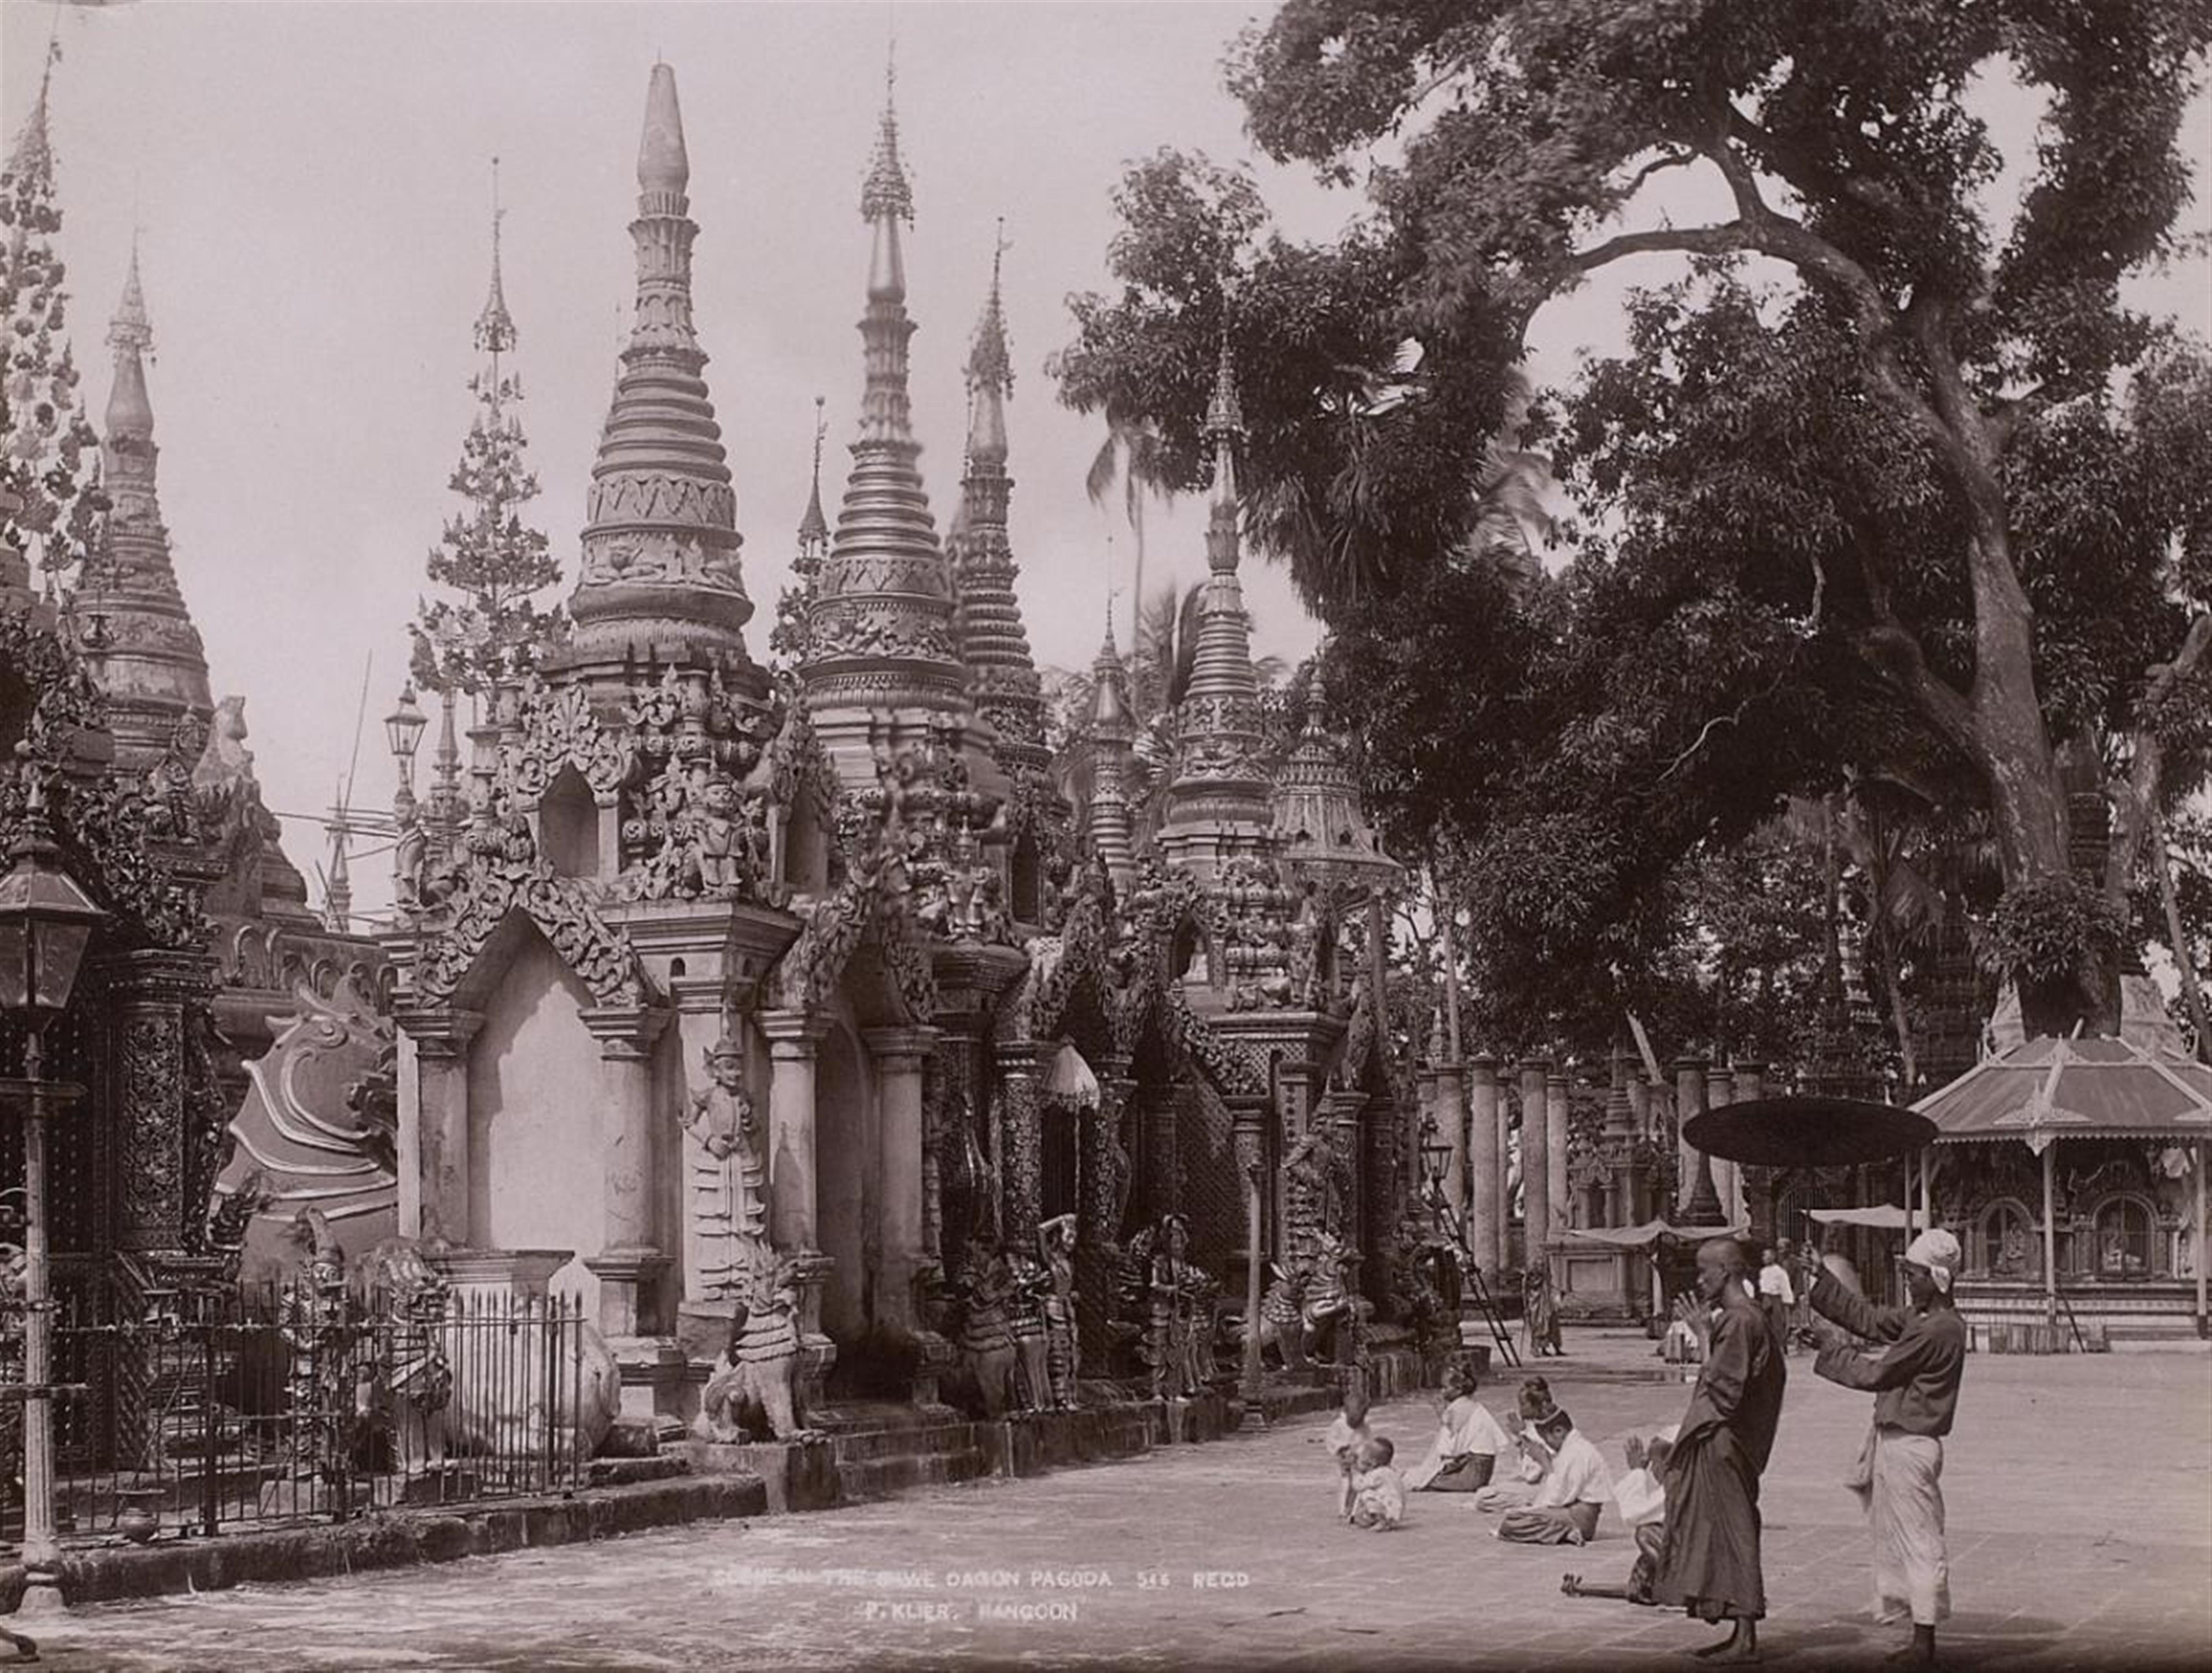 Adolphe Philip Klier - Untitled (Views of Burma) - image-8